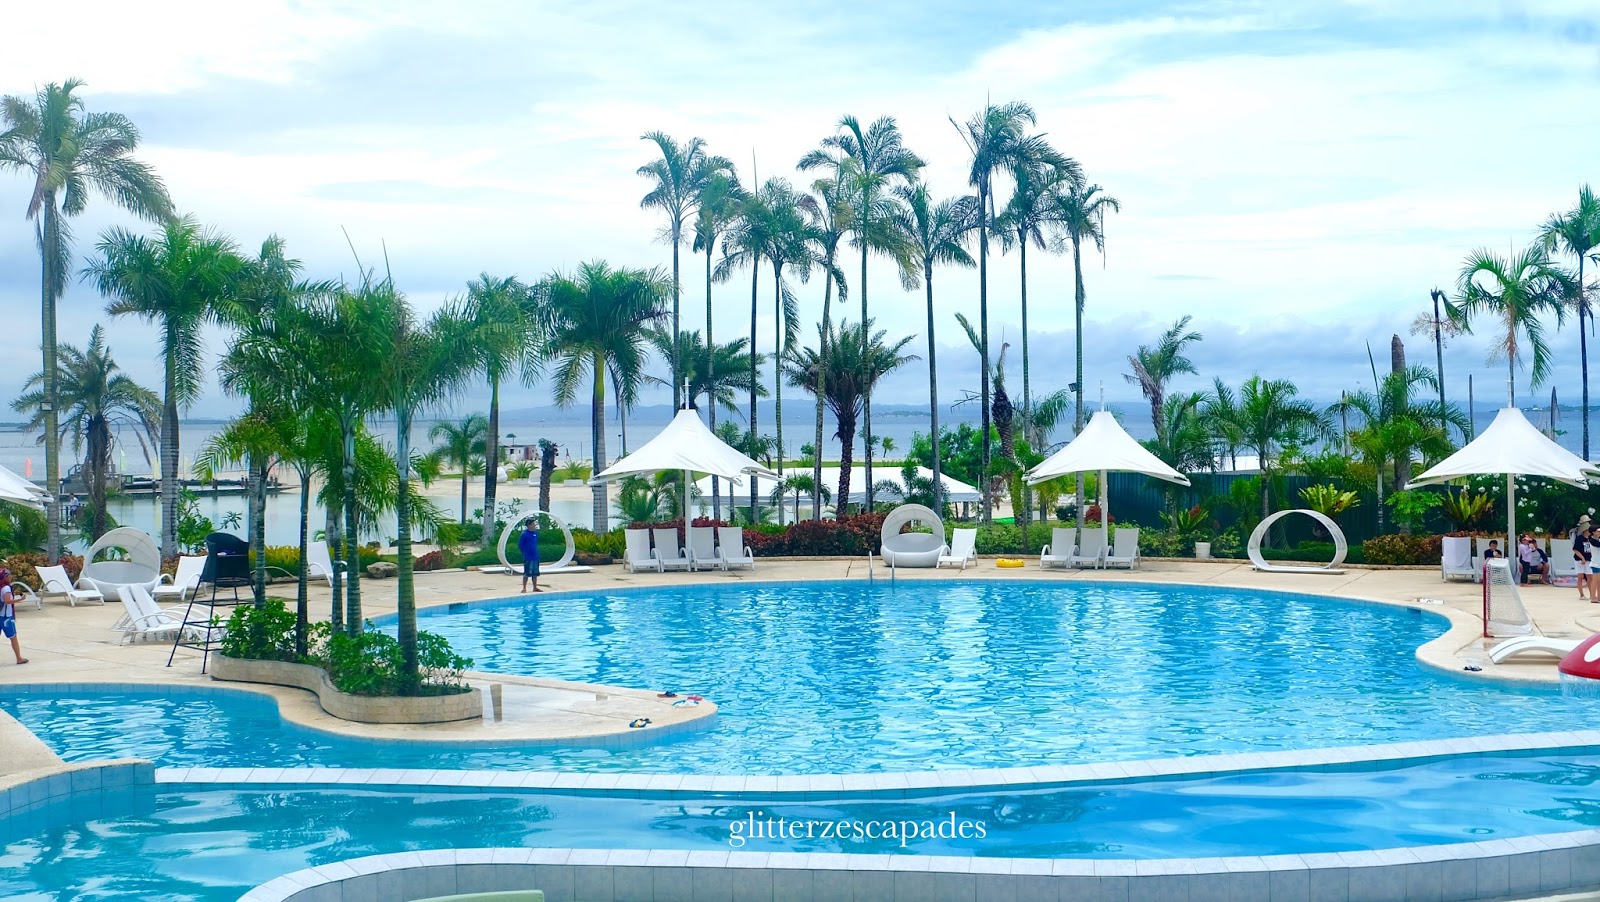 Spending an amazing day at Solea Mactan Cebu Resort